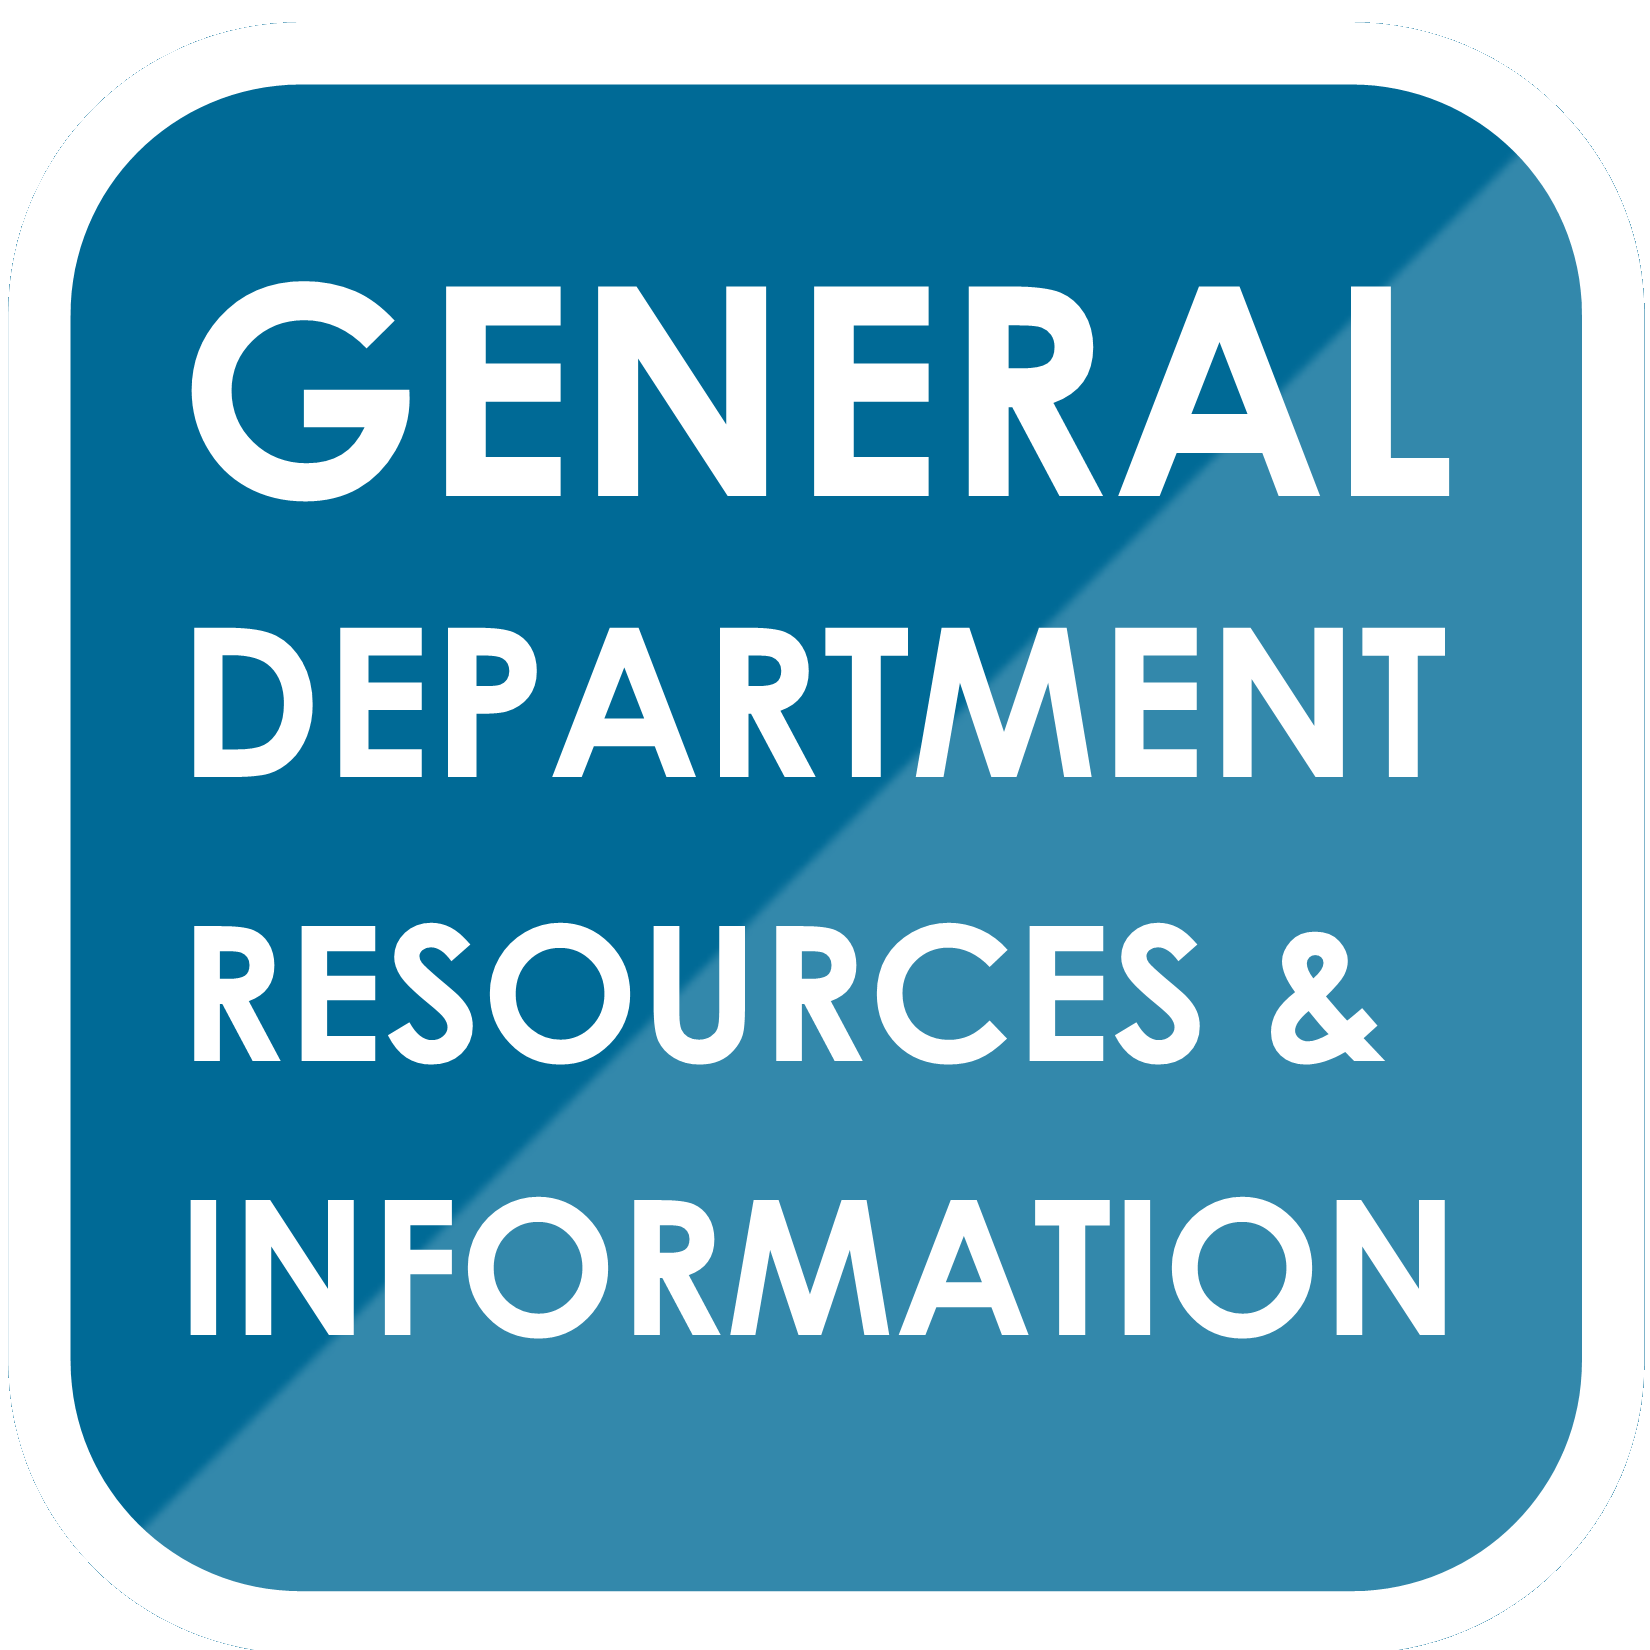 General Department Resources